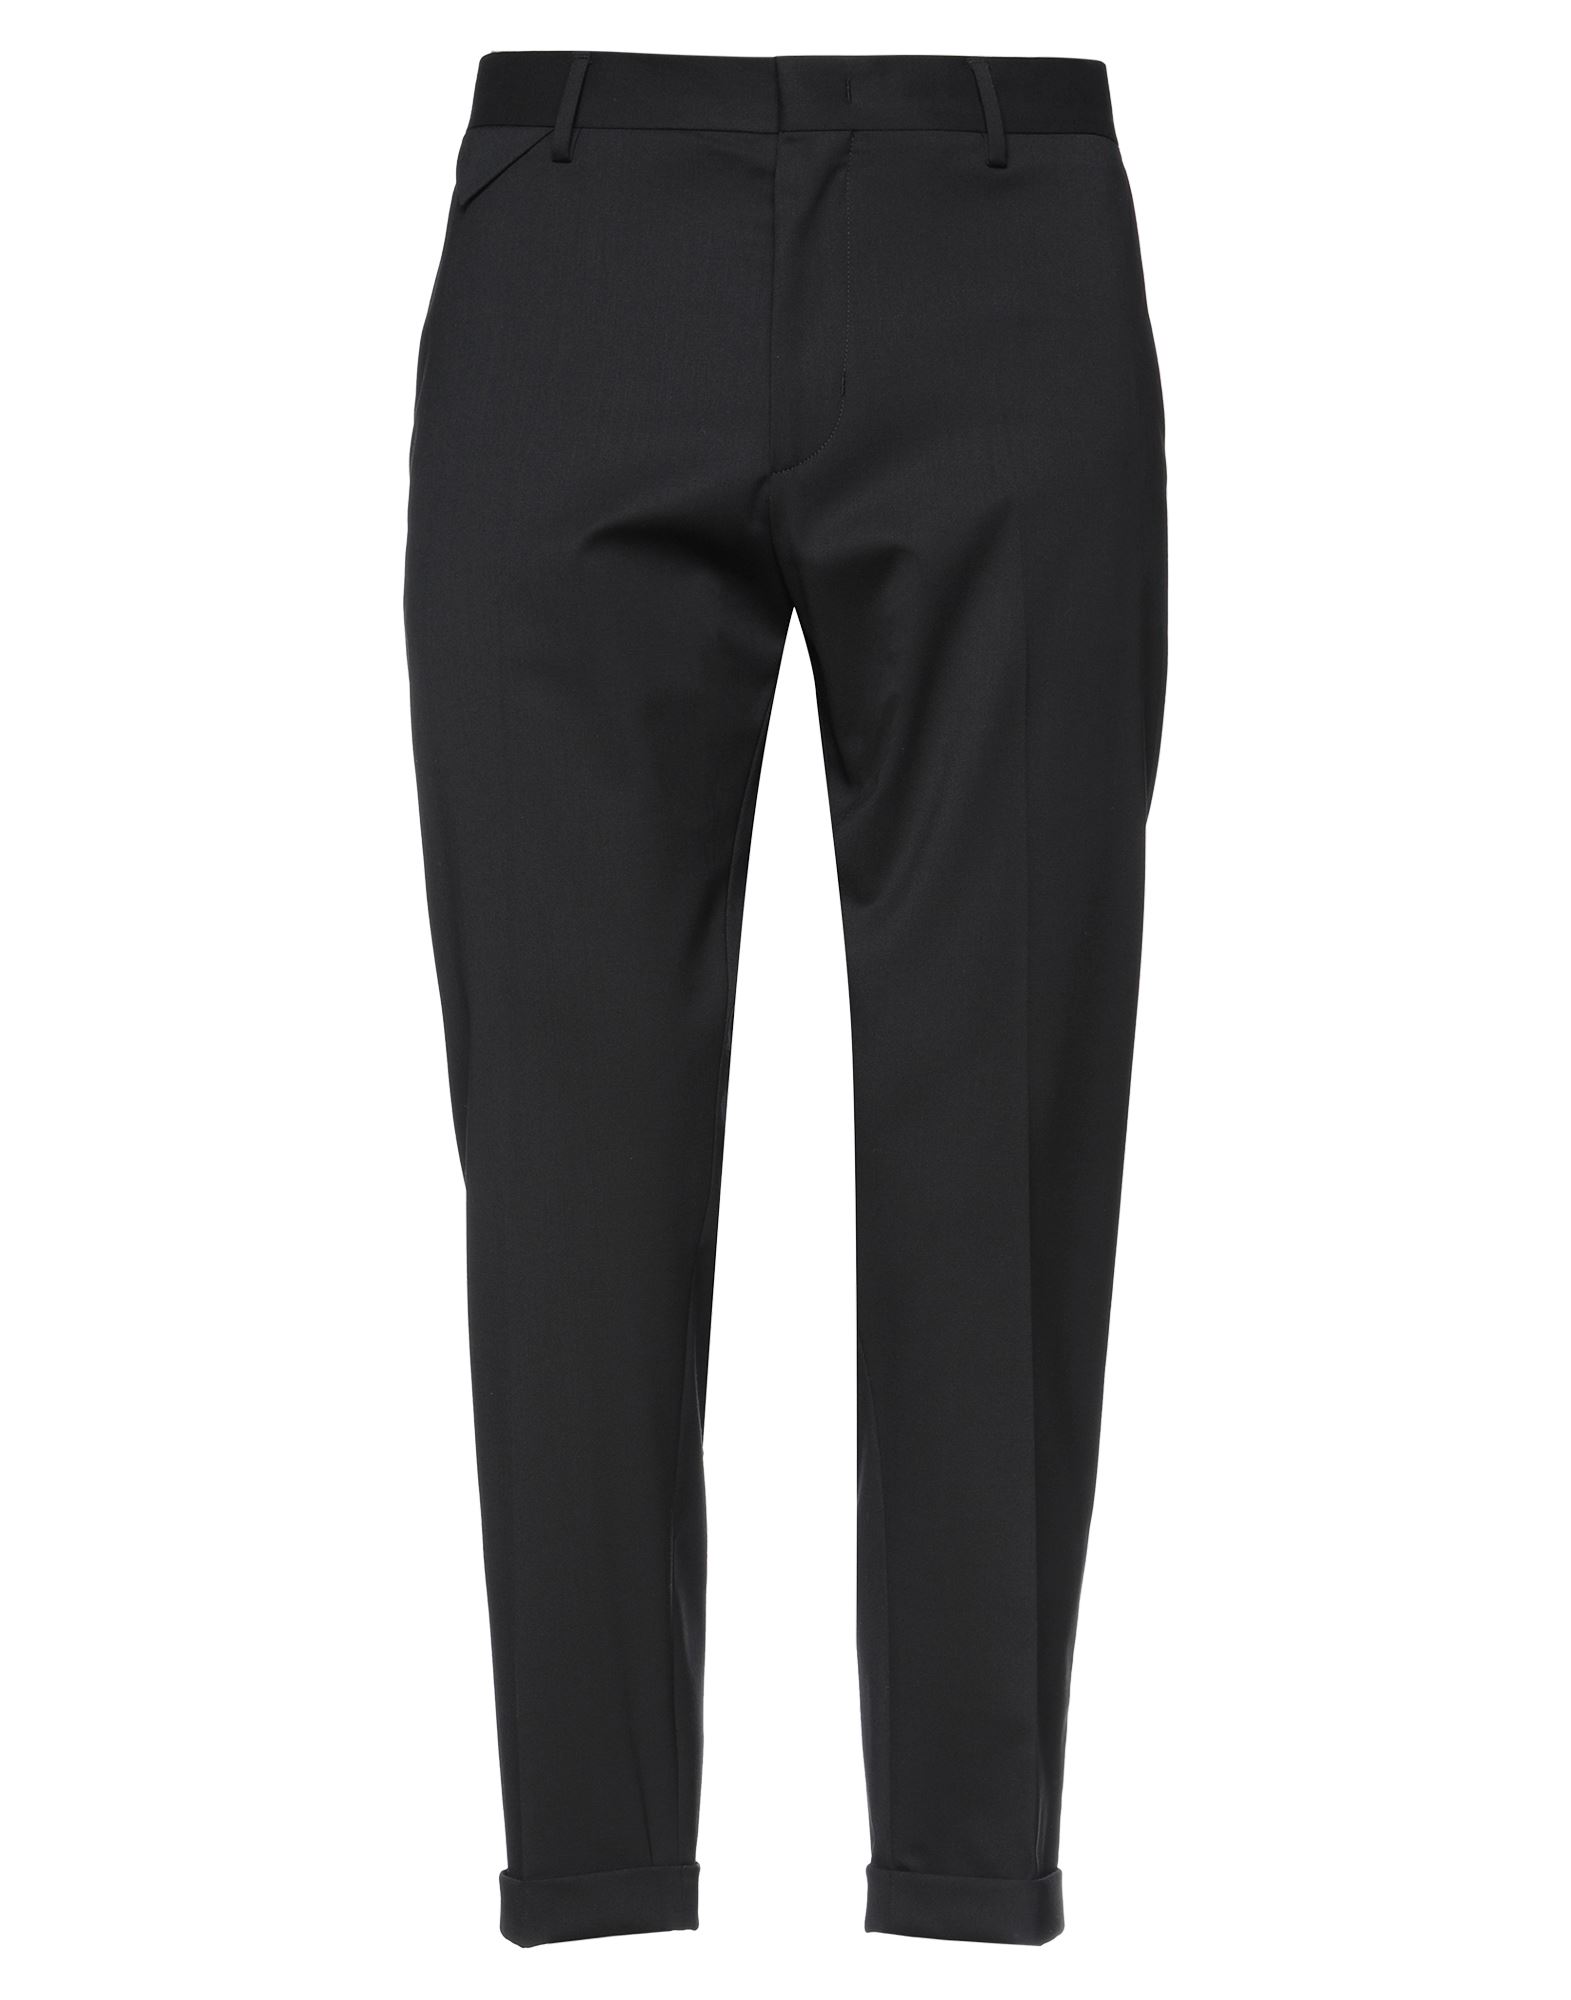 Low Brand Man Pants Black Size 34 Virgin Wool, Polyester, Lycra